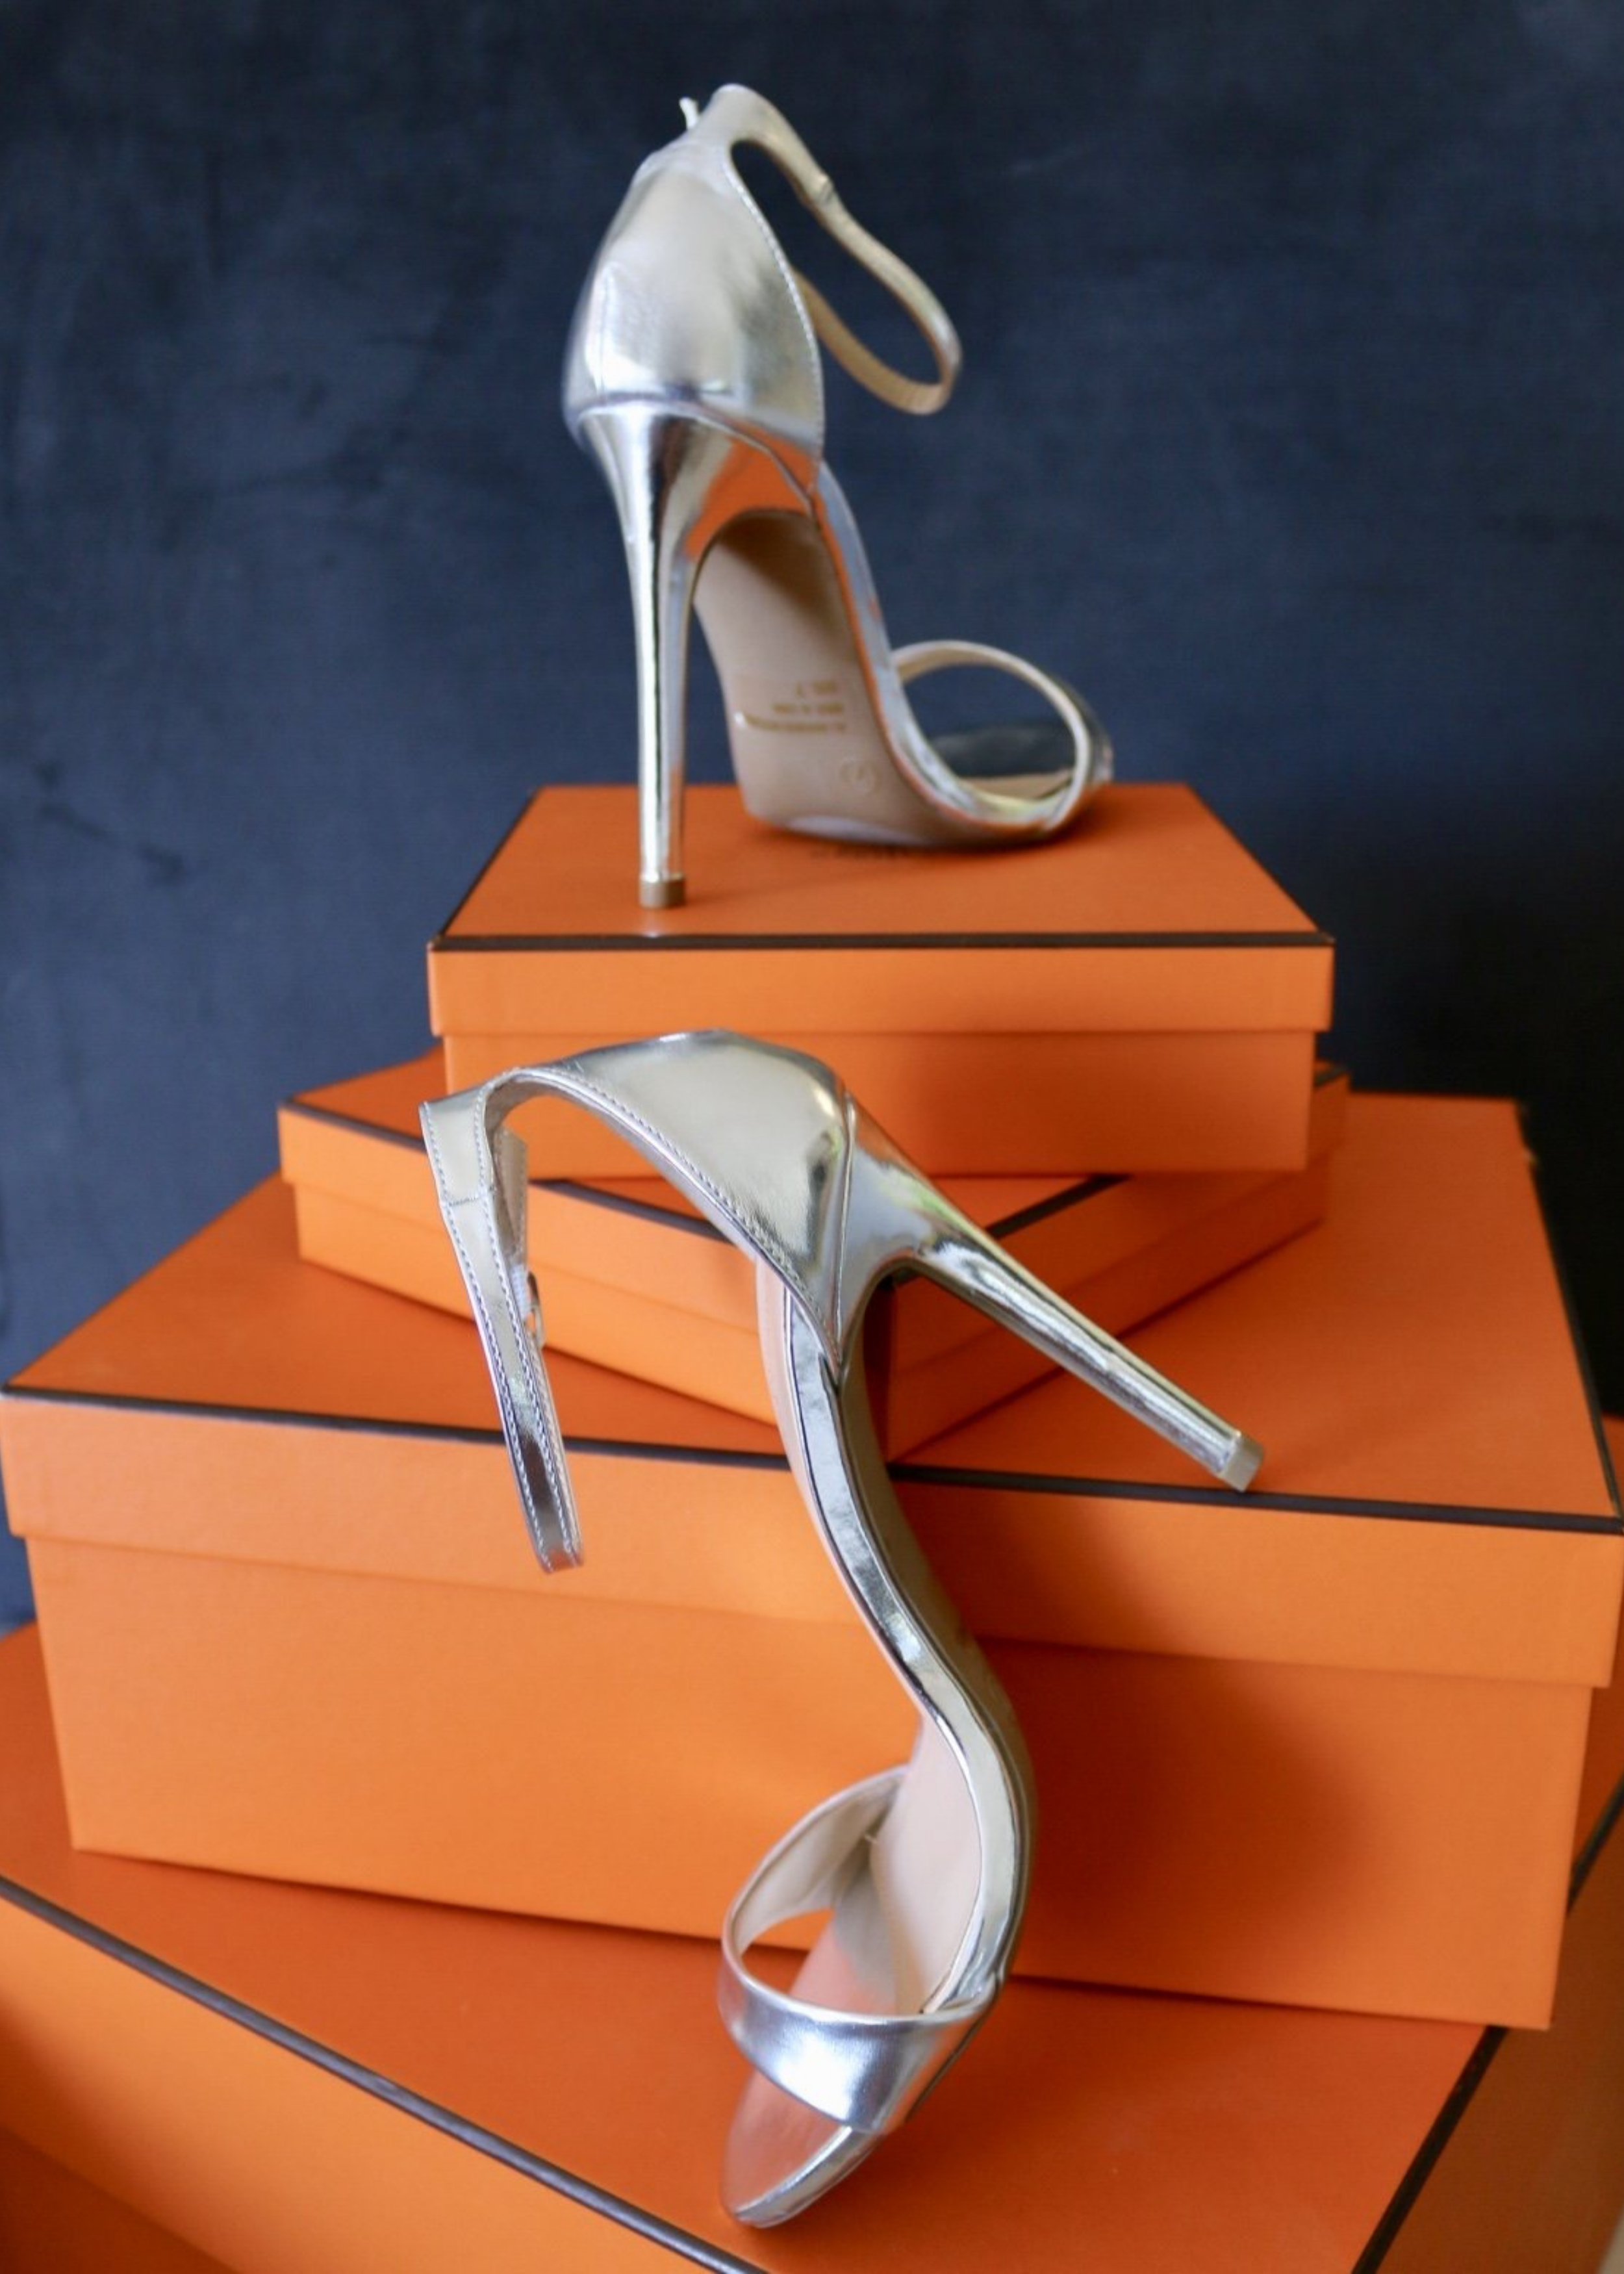 Silver Metallic "Ali" sandal heels propped up on orange boxes.